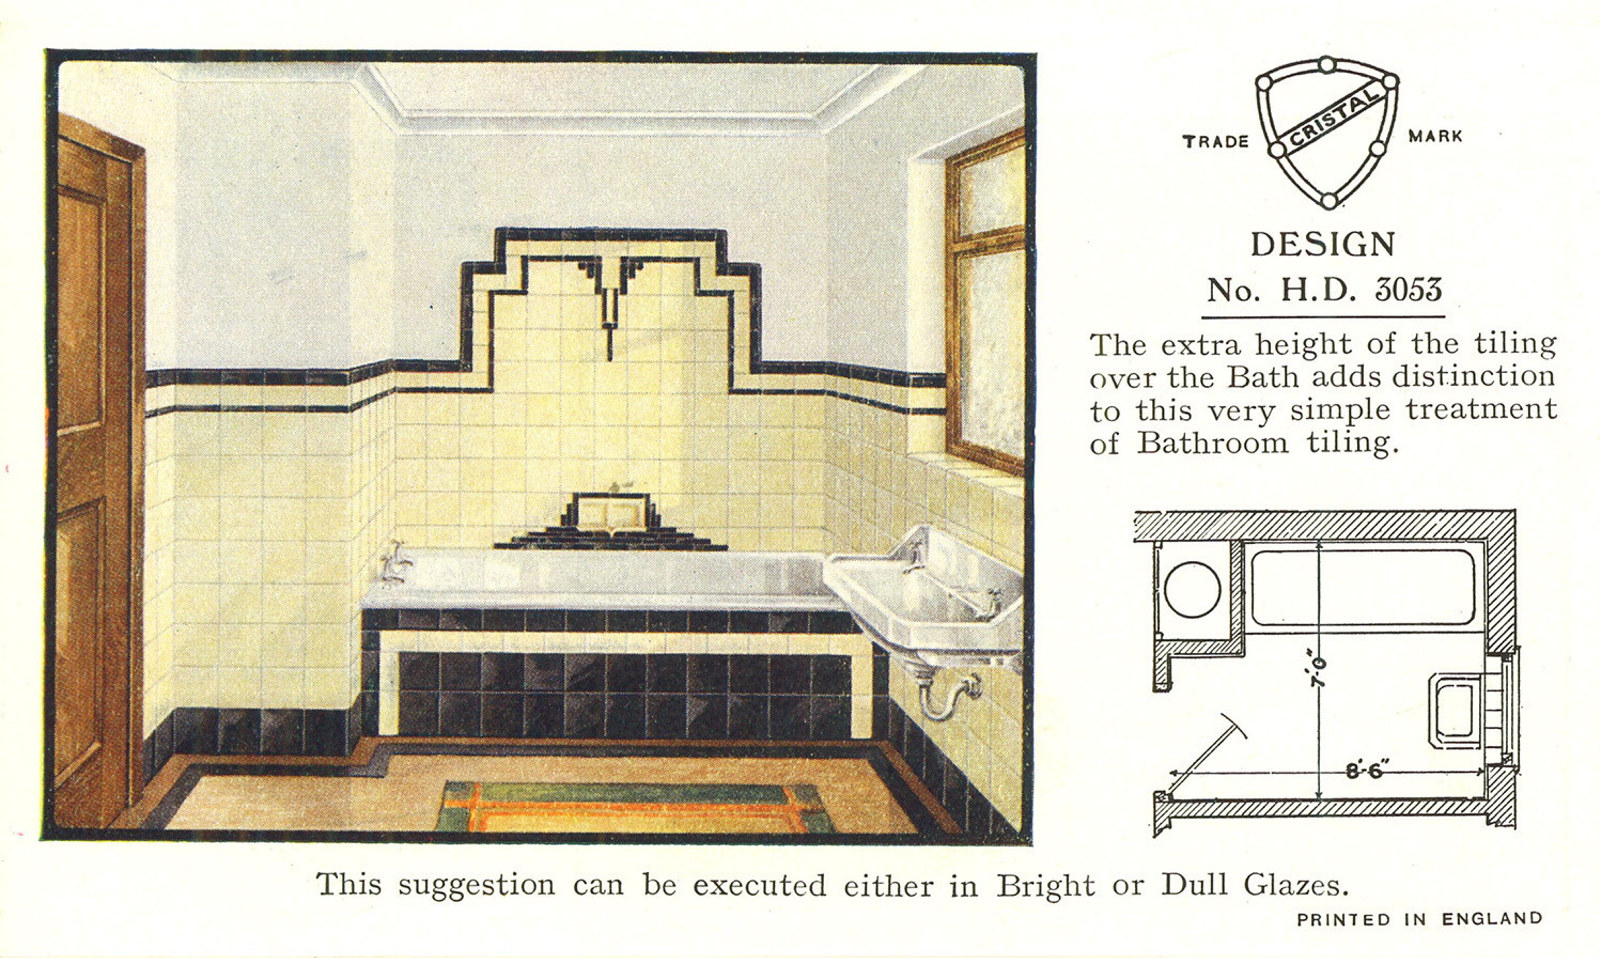 Trade catalogue for "Modern Bathroom Designs" for H & R Johnson Ltd, Sydney, 1934.